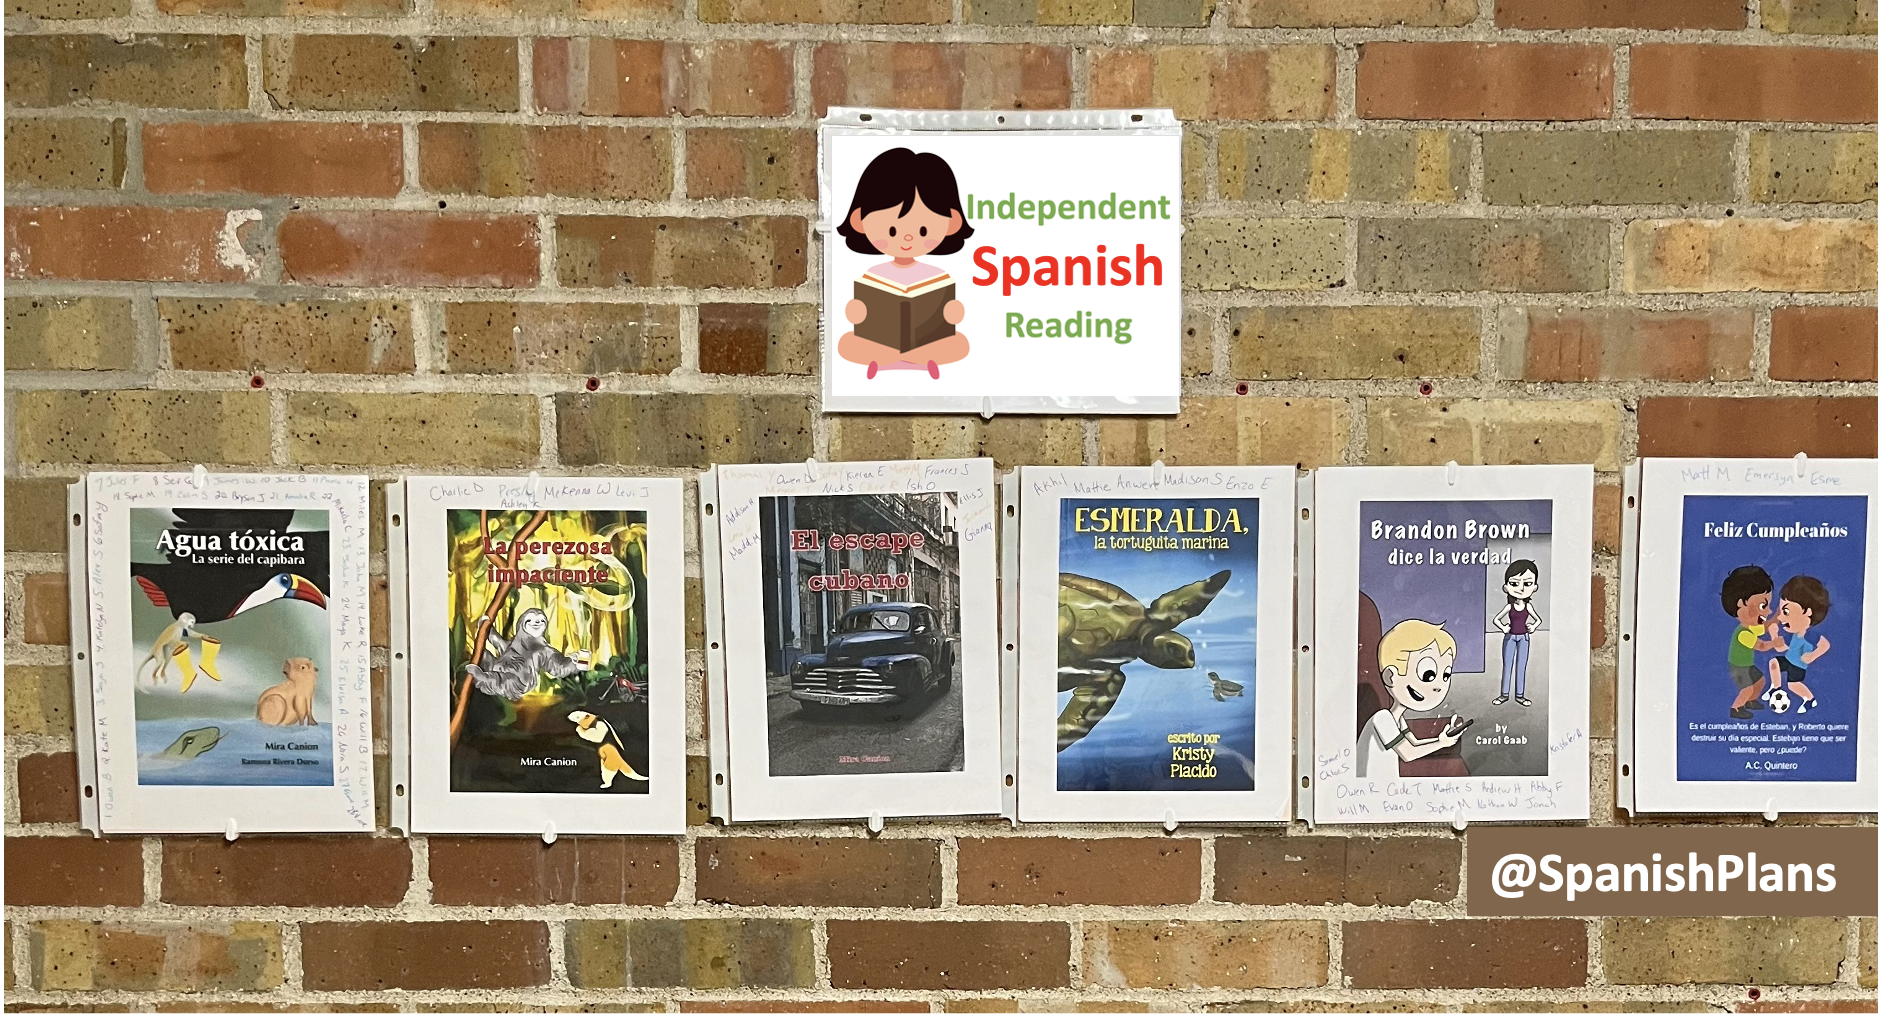 Independent Spanish Reading blog post